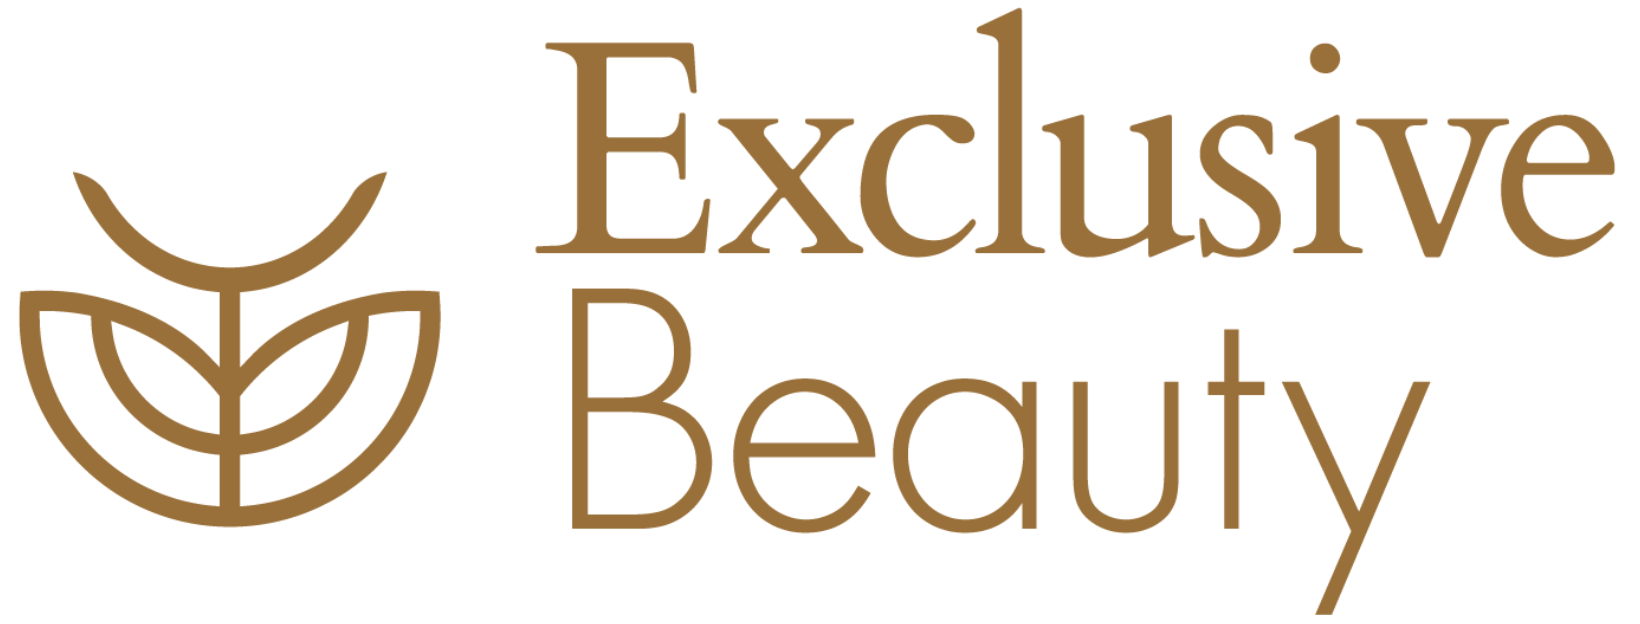 Exclusive Beauty Club logo